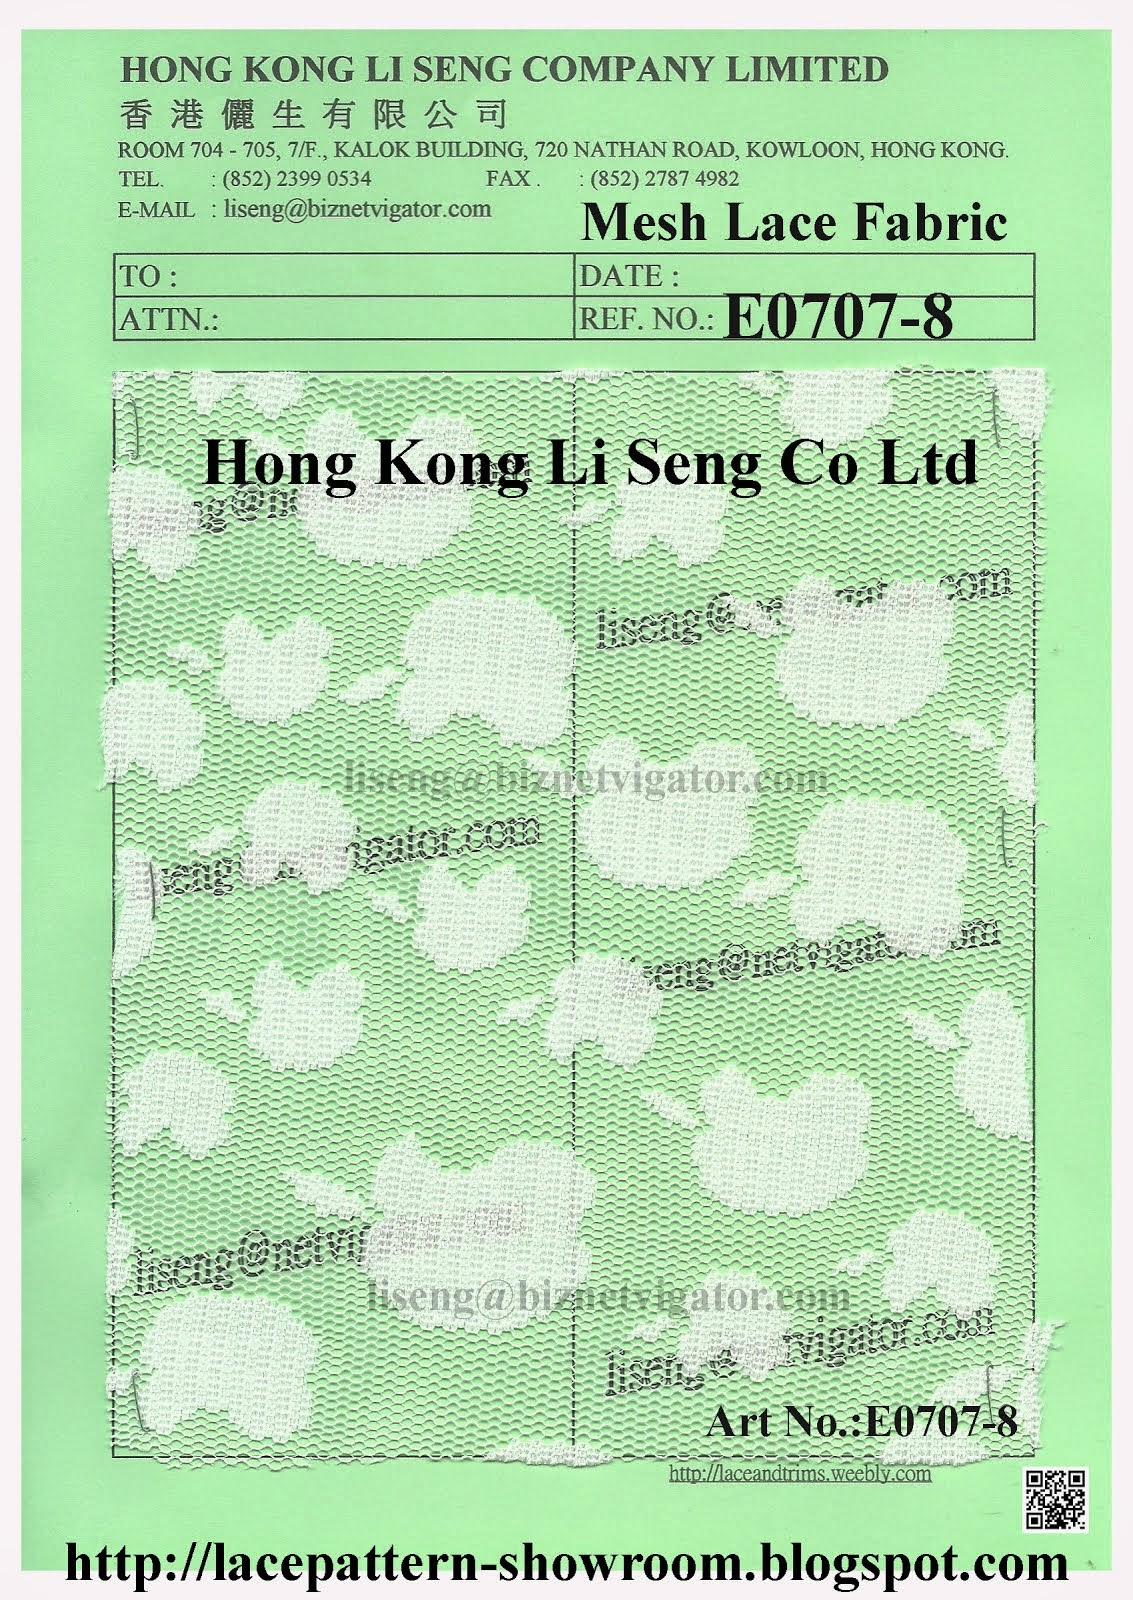 Mesh Lace Fabric Factory Wholesaler and Supplier - " Hong Kong Li Seng Co Ltd "